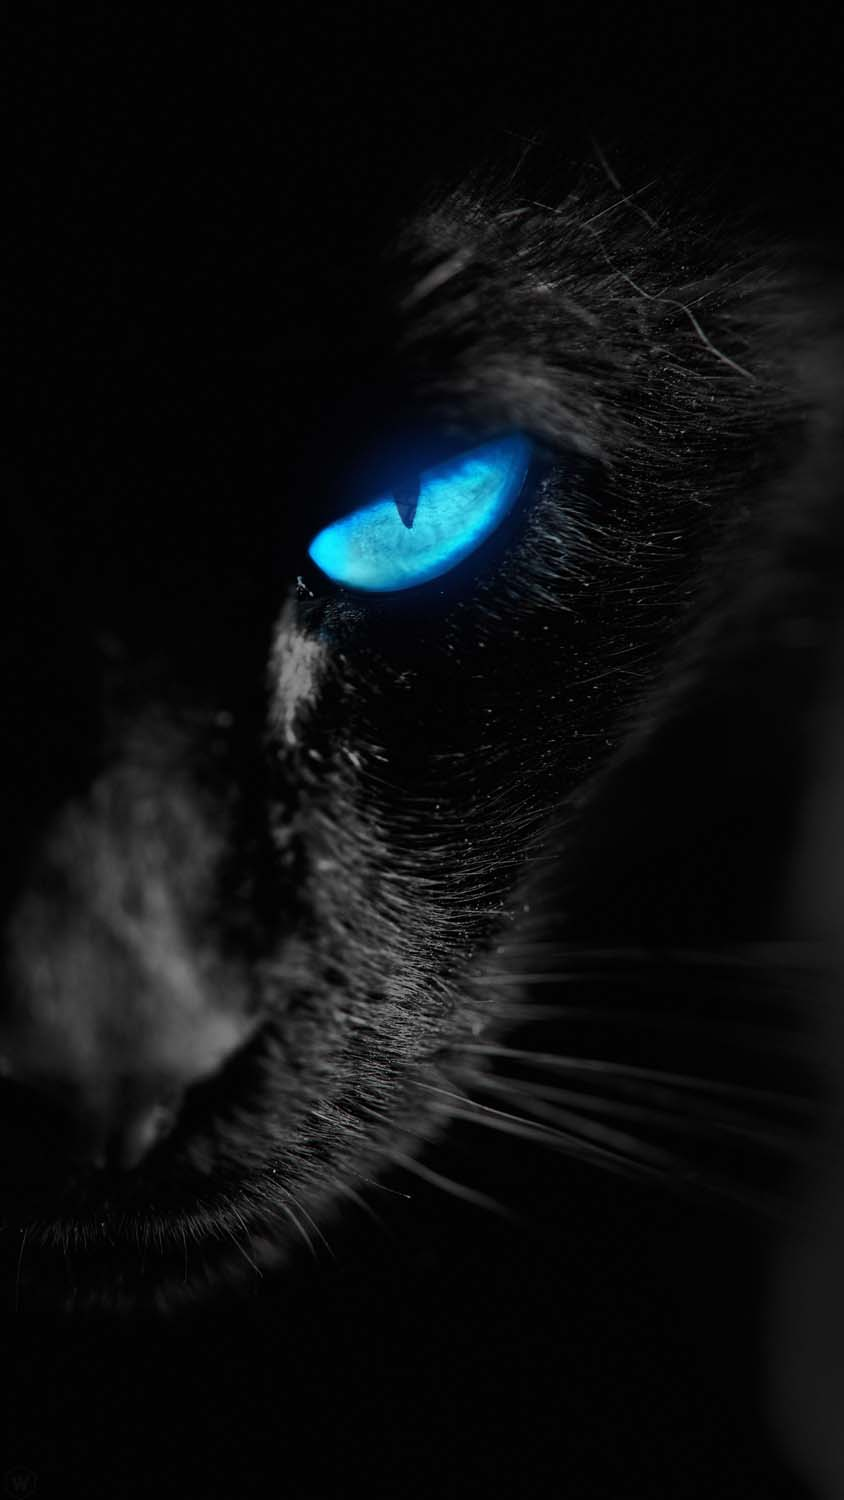 100 Black Cat Pictures  Download Free Images on Unsplash